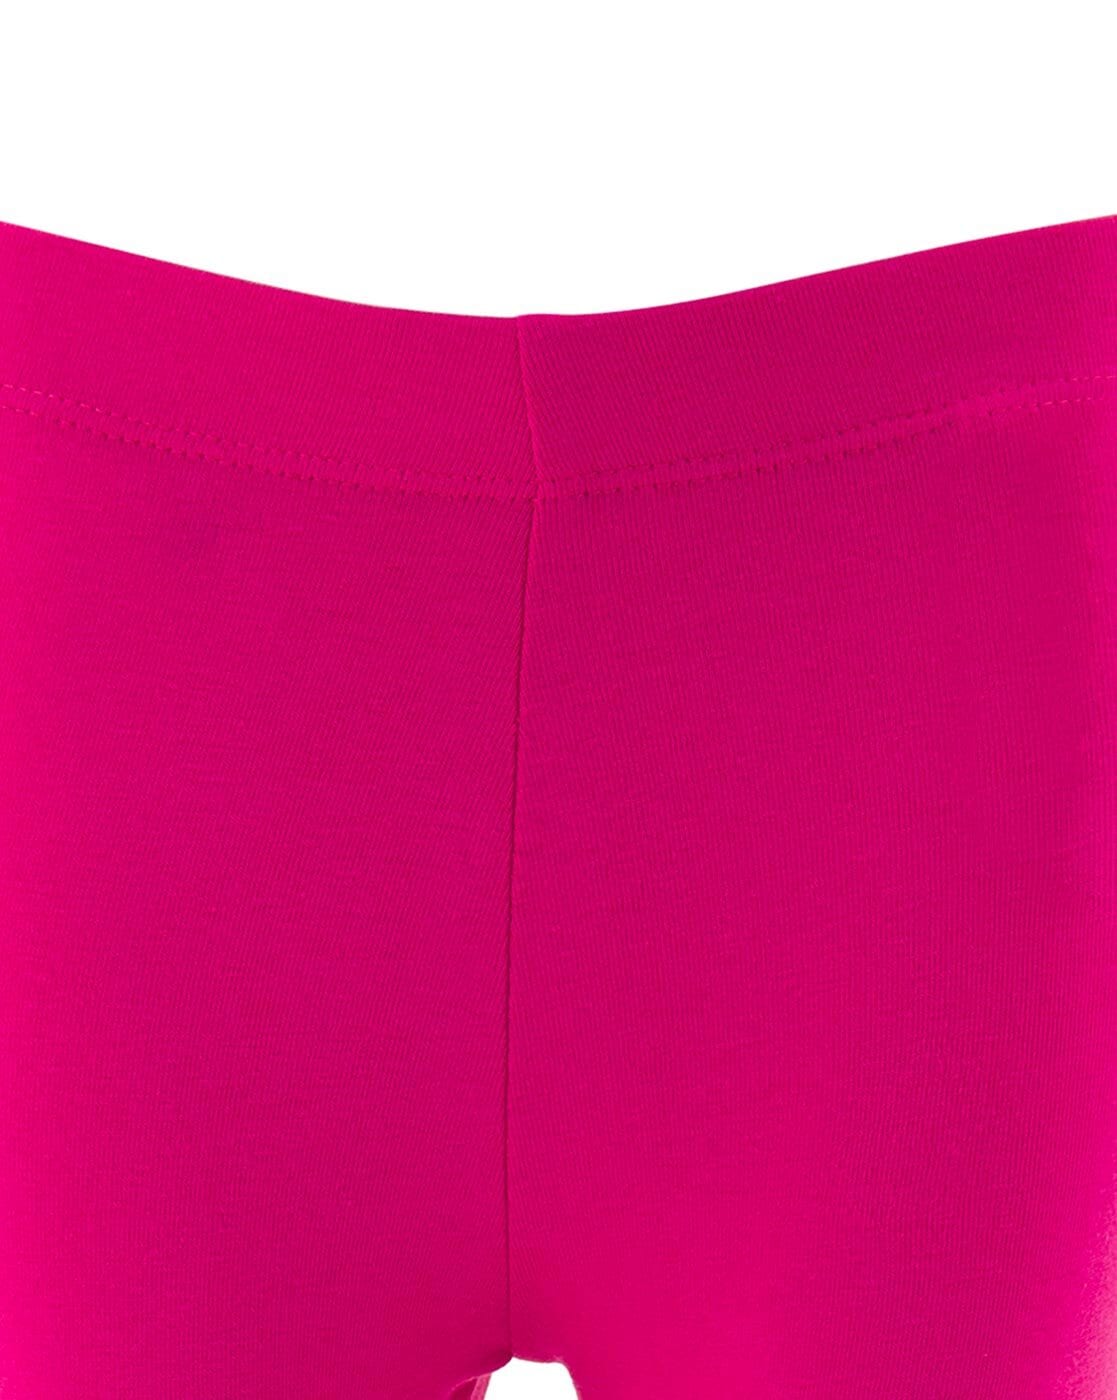 Buy Pink Leggings for Girls by R&B Online